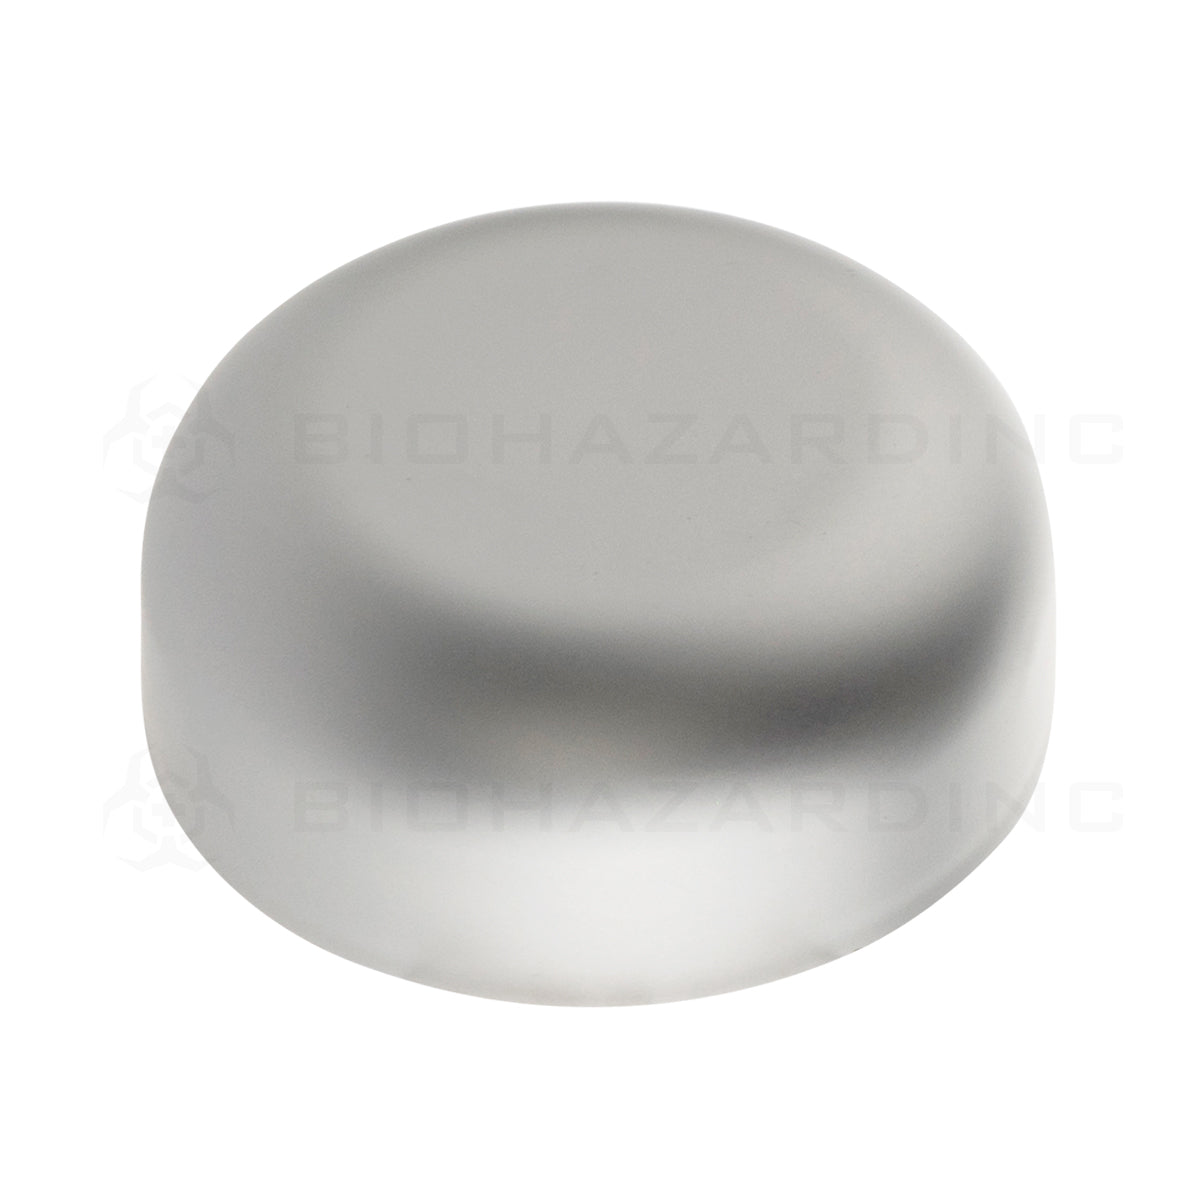 Child Resistant Cap | Plastic Cap | 53mm - Matte Silver - 100 Count Child Resistant Cap Biohazard Inc   